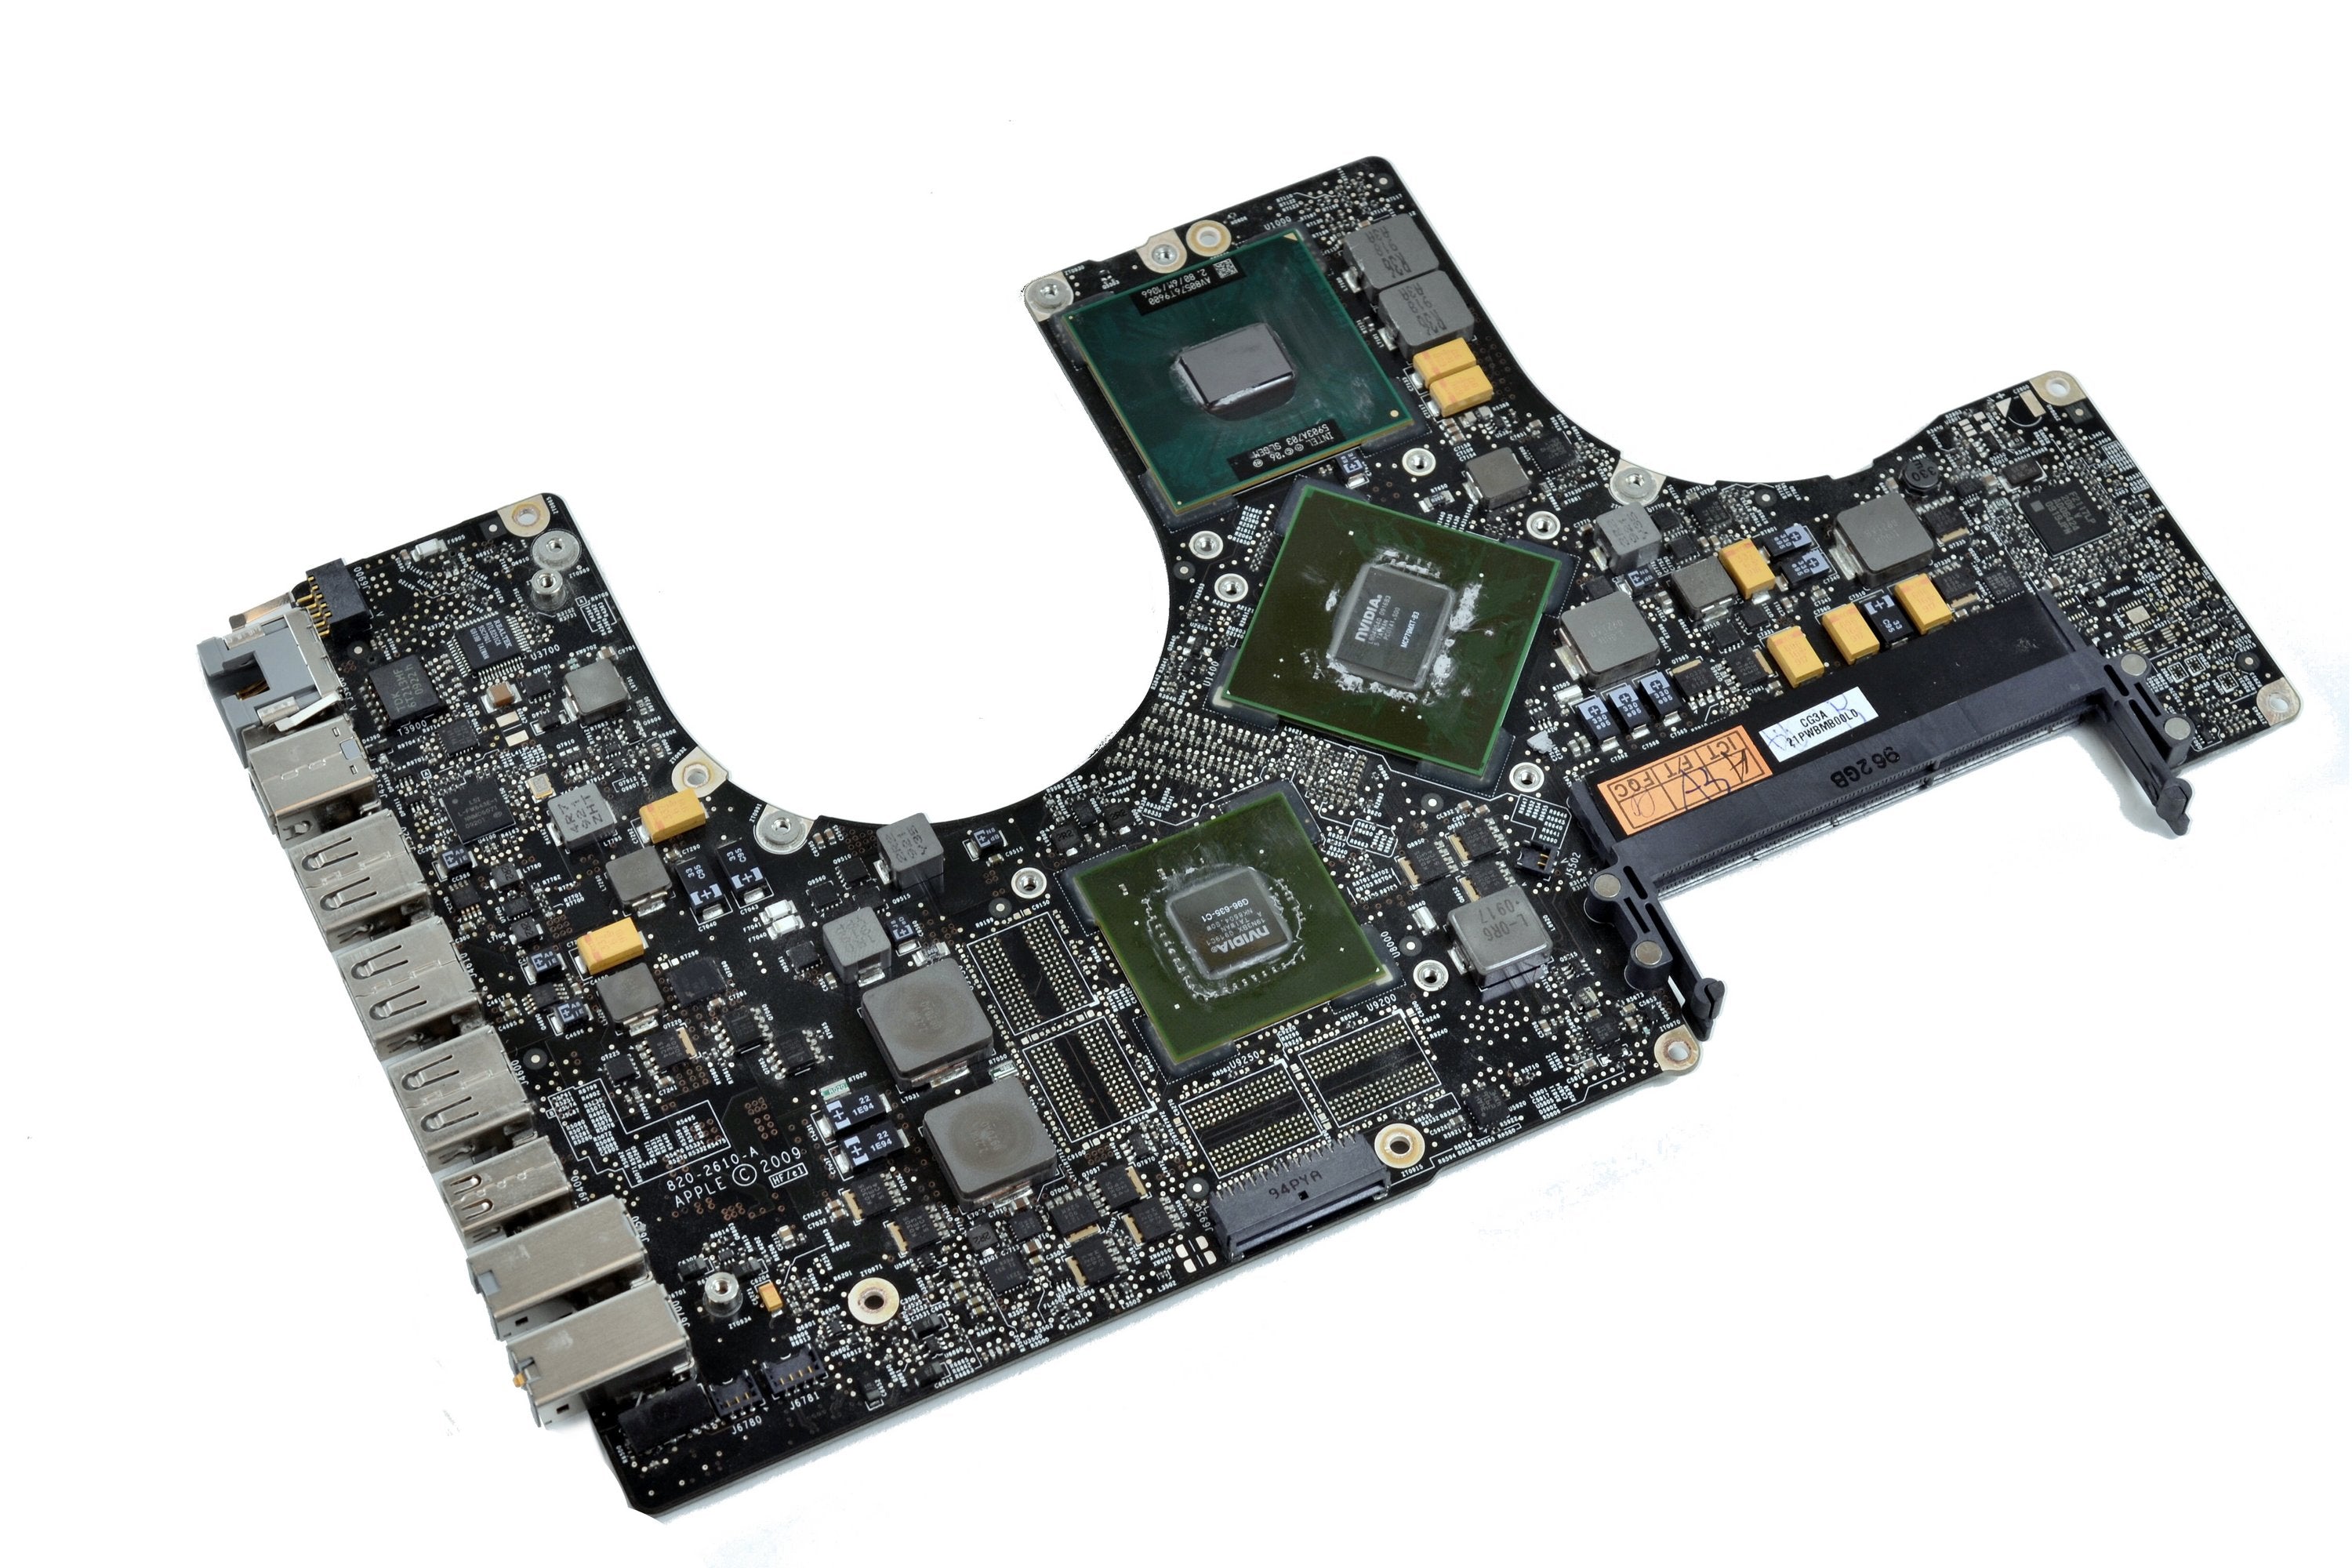 MacBook Pro 17" Unibody (Mid 2009) 2.8 GHz Logic Board